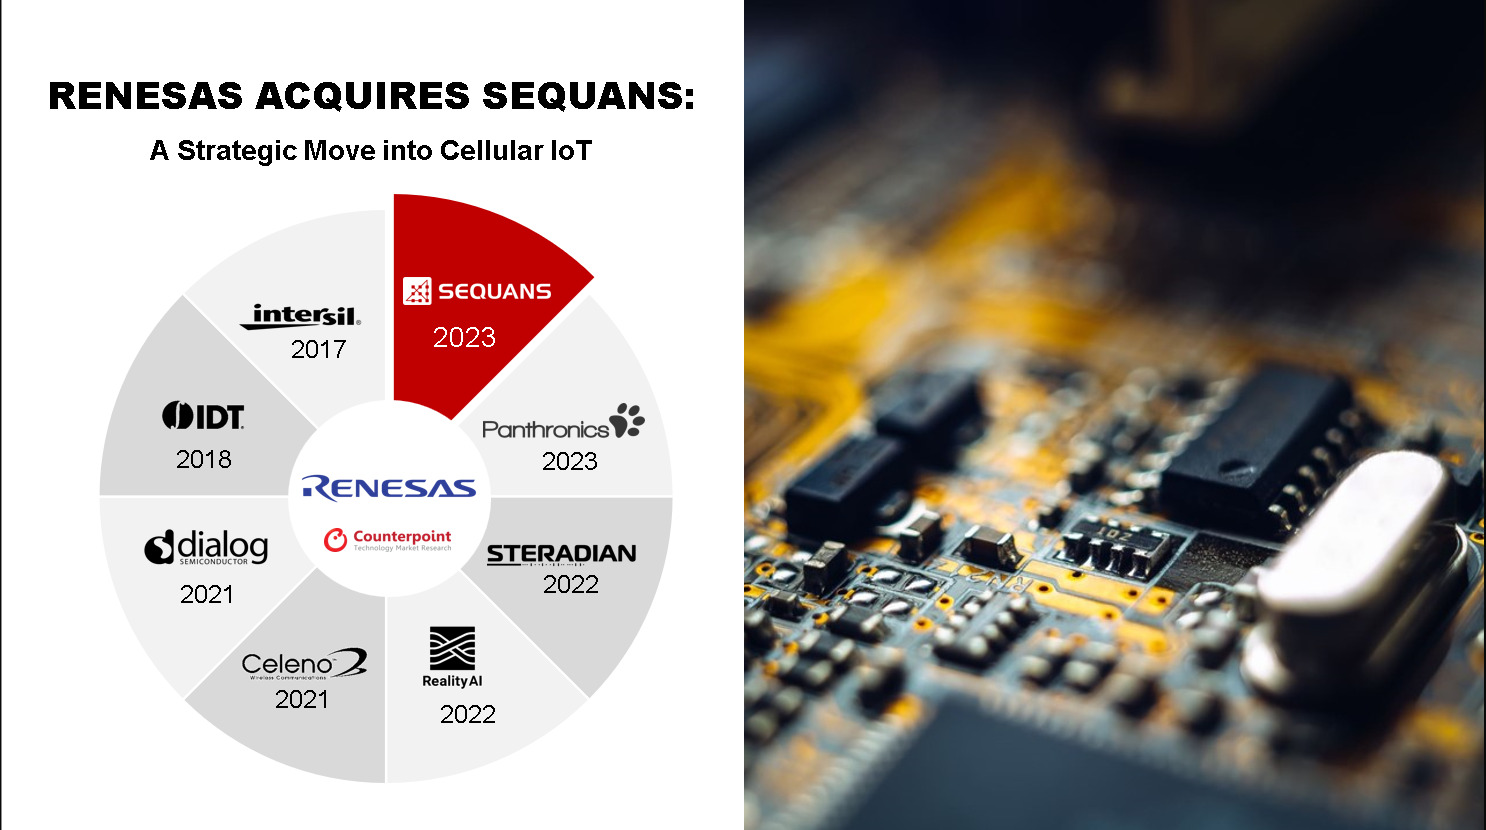 Renesas Acquires Sequans: A Strategic Move into Cellular IoT